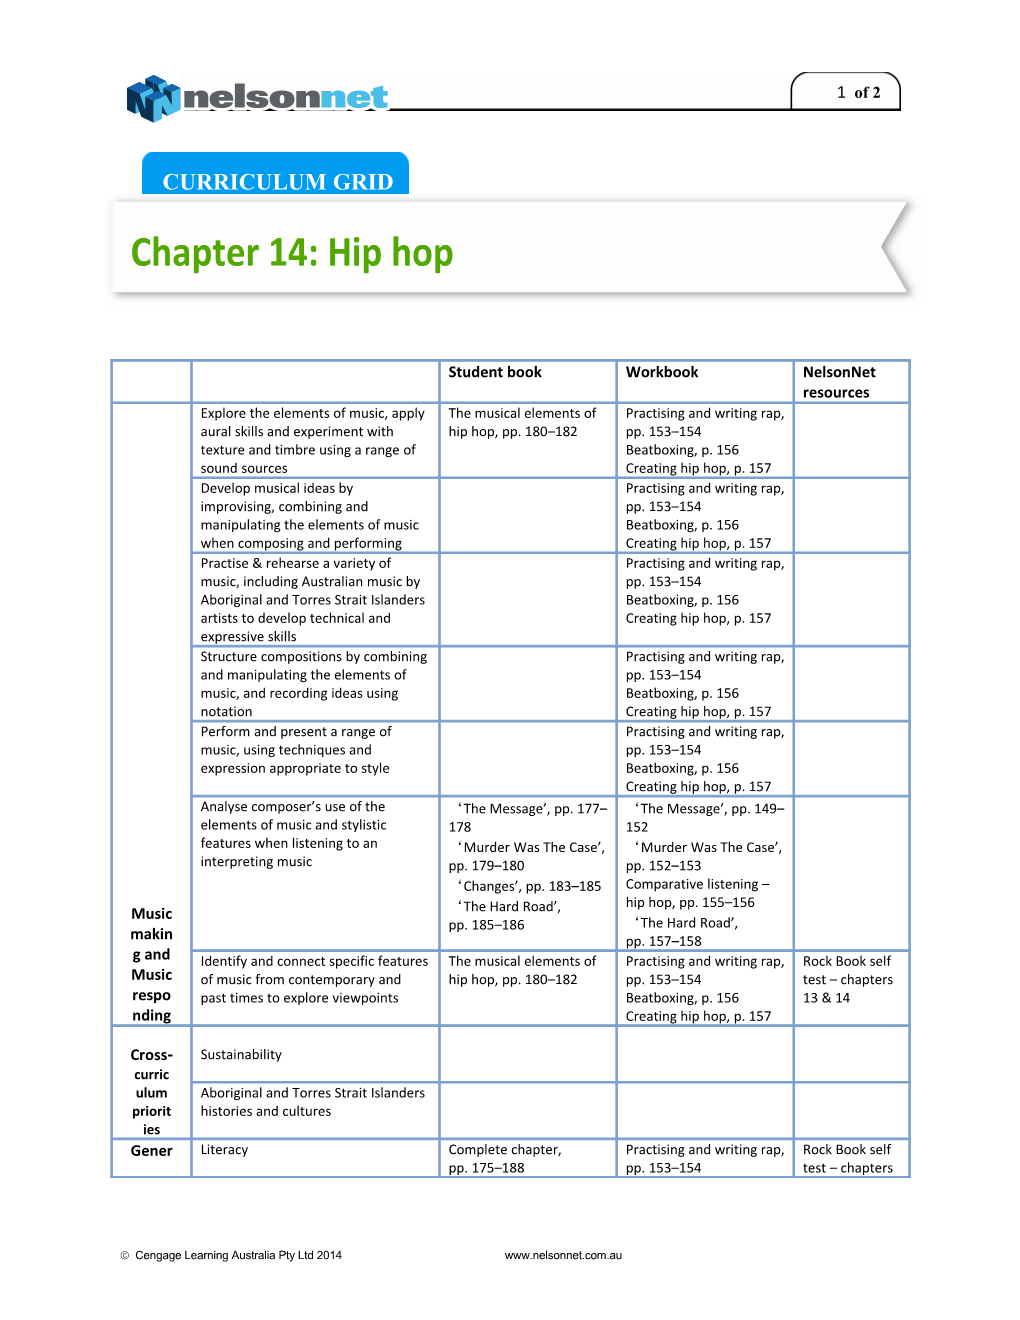 Chapter 14: Hip Hop